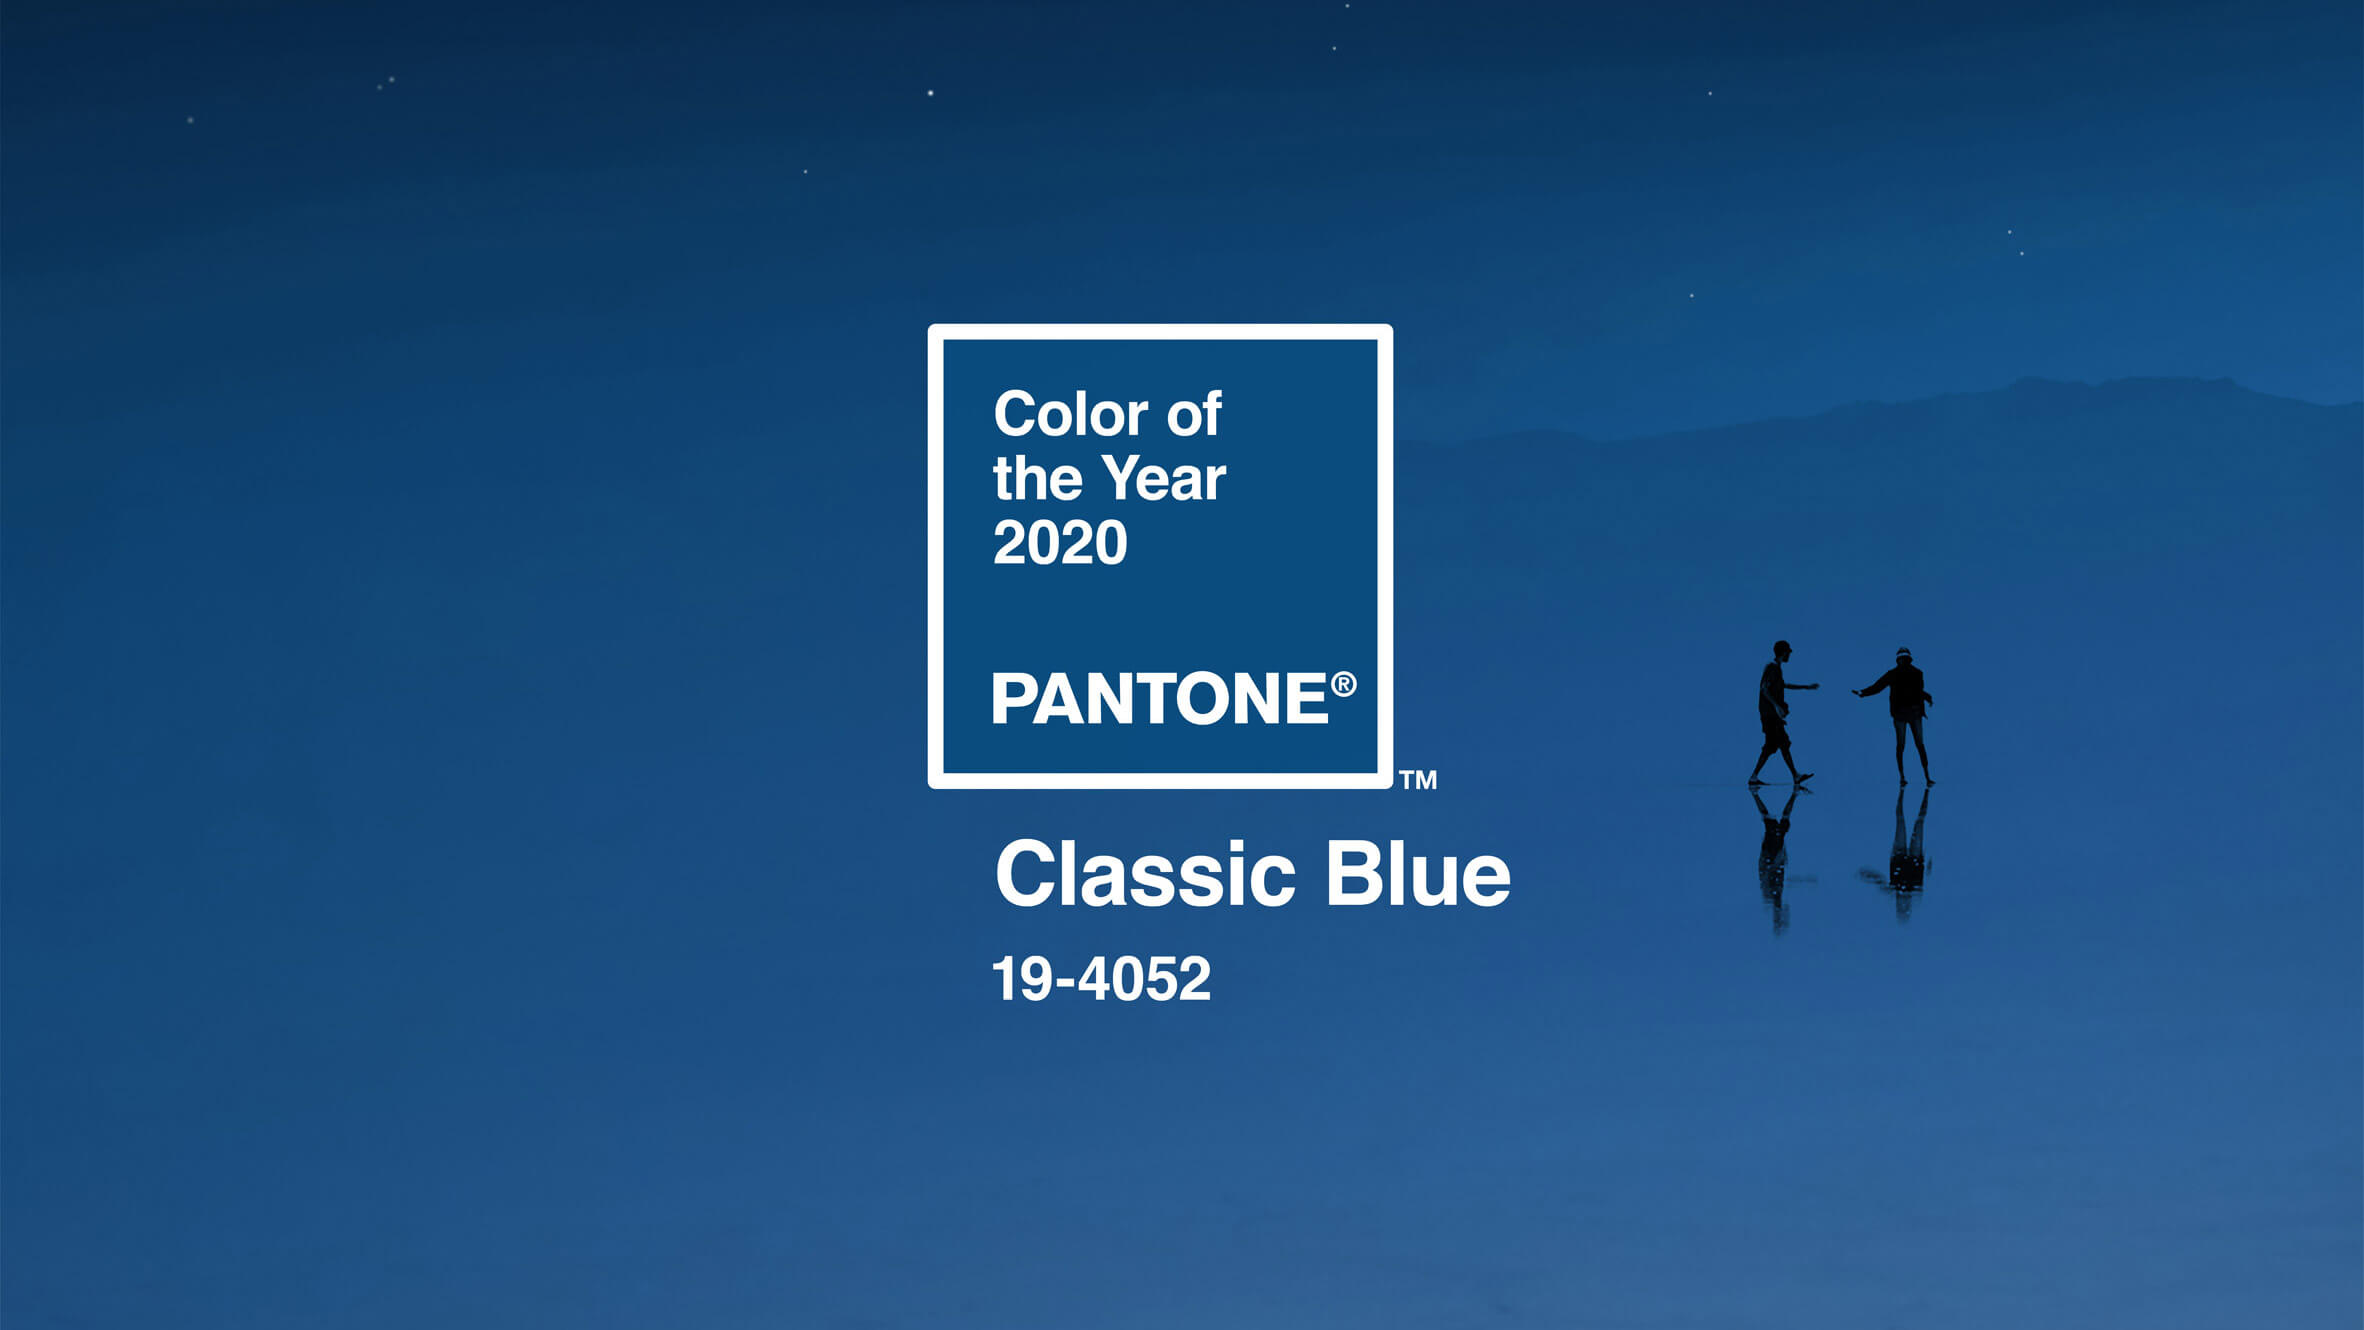 Classic Blue, or Pantone 19-4052 peopel on blue beach